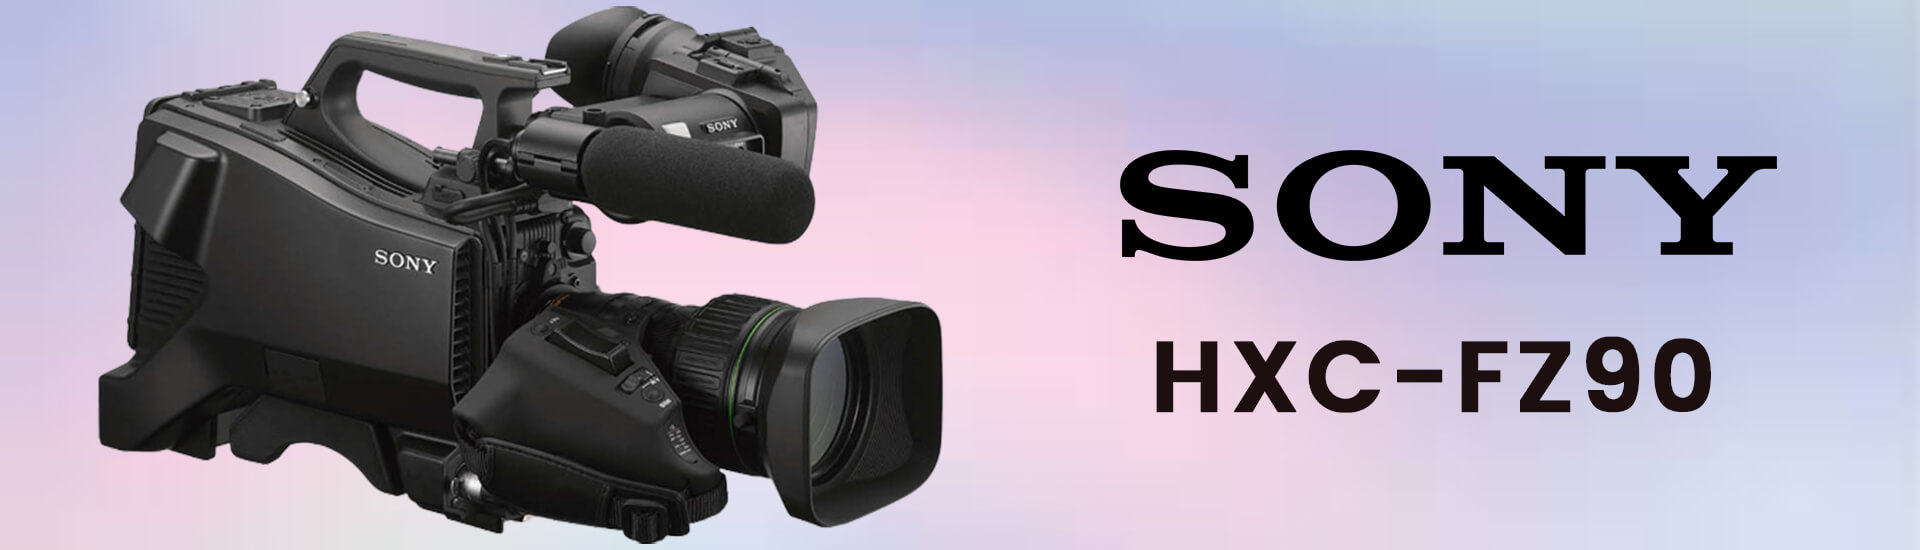 Sony HXC-FZ90: Revolutionizing Broadcast Camera Technology